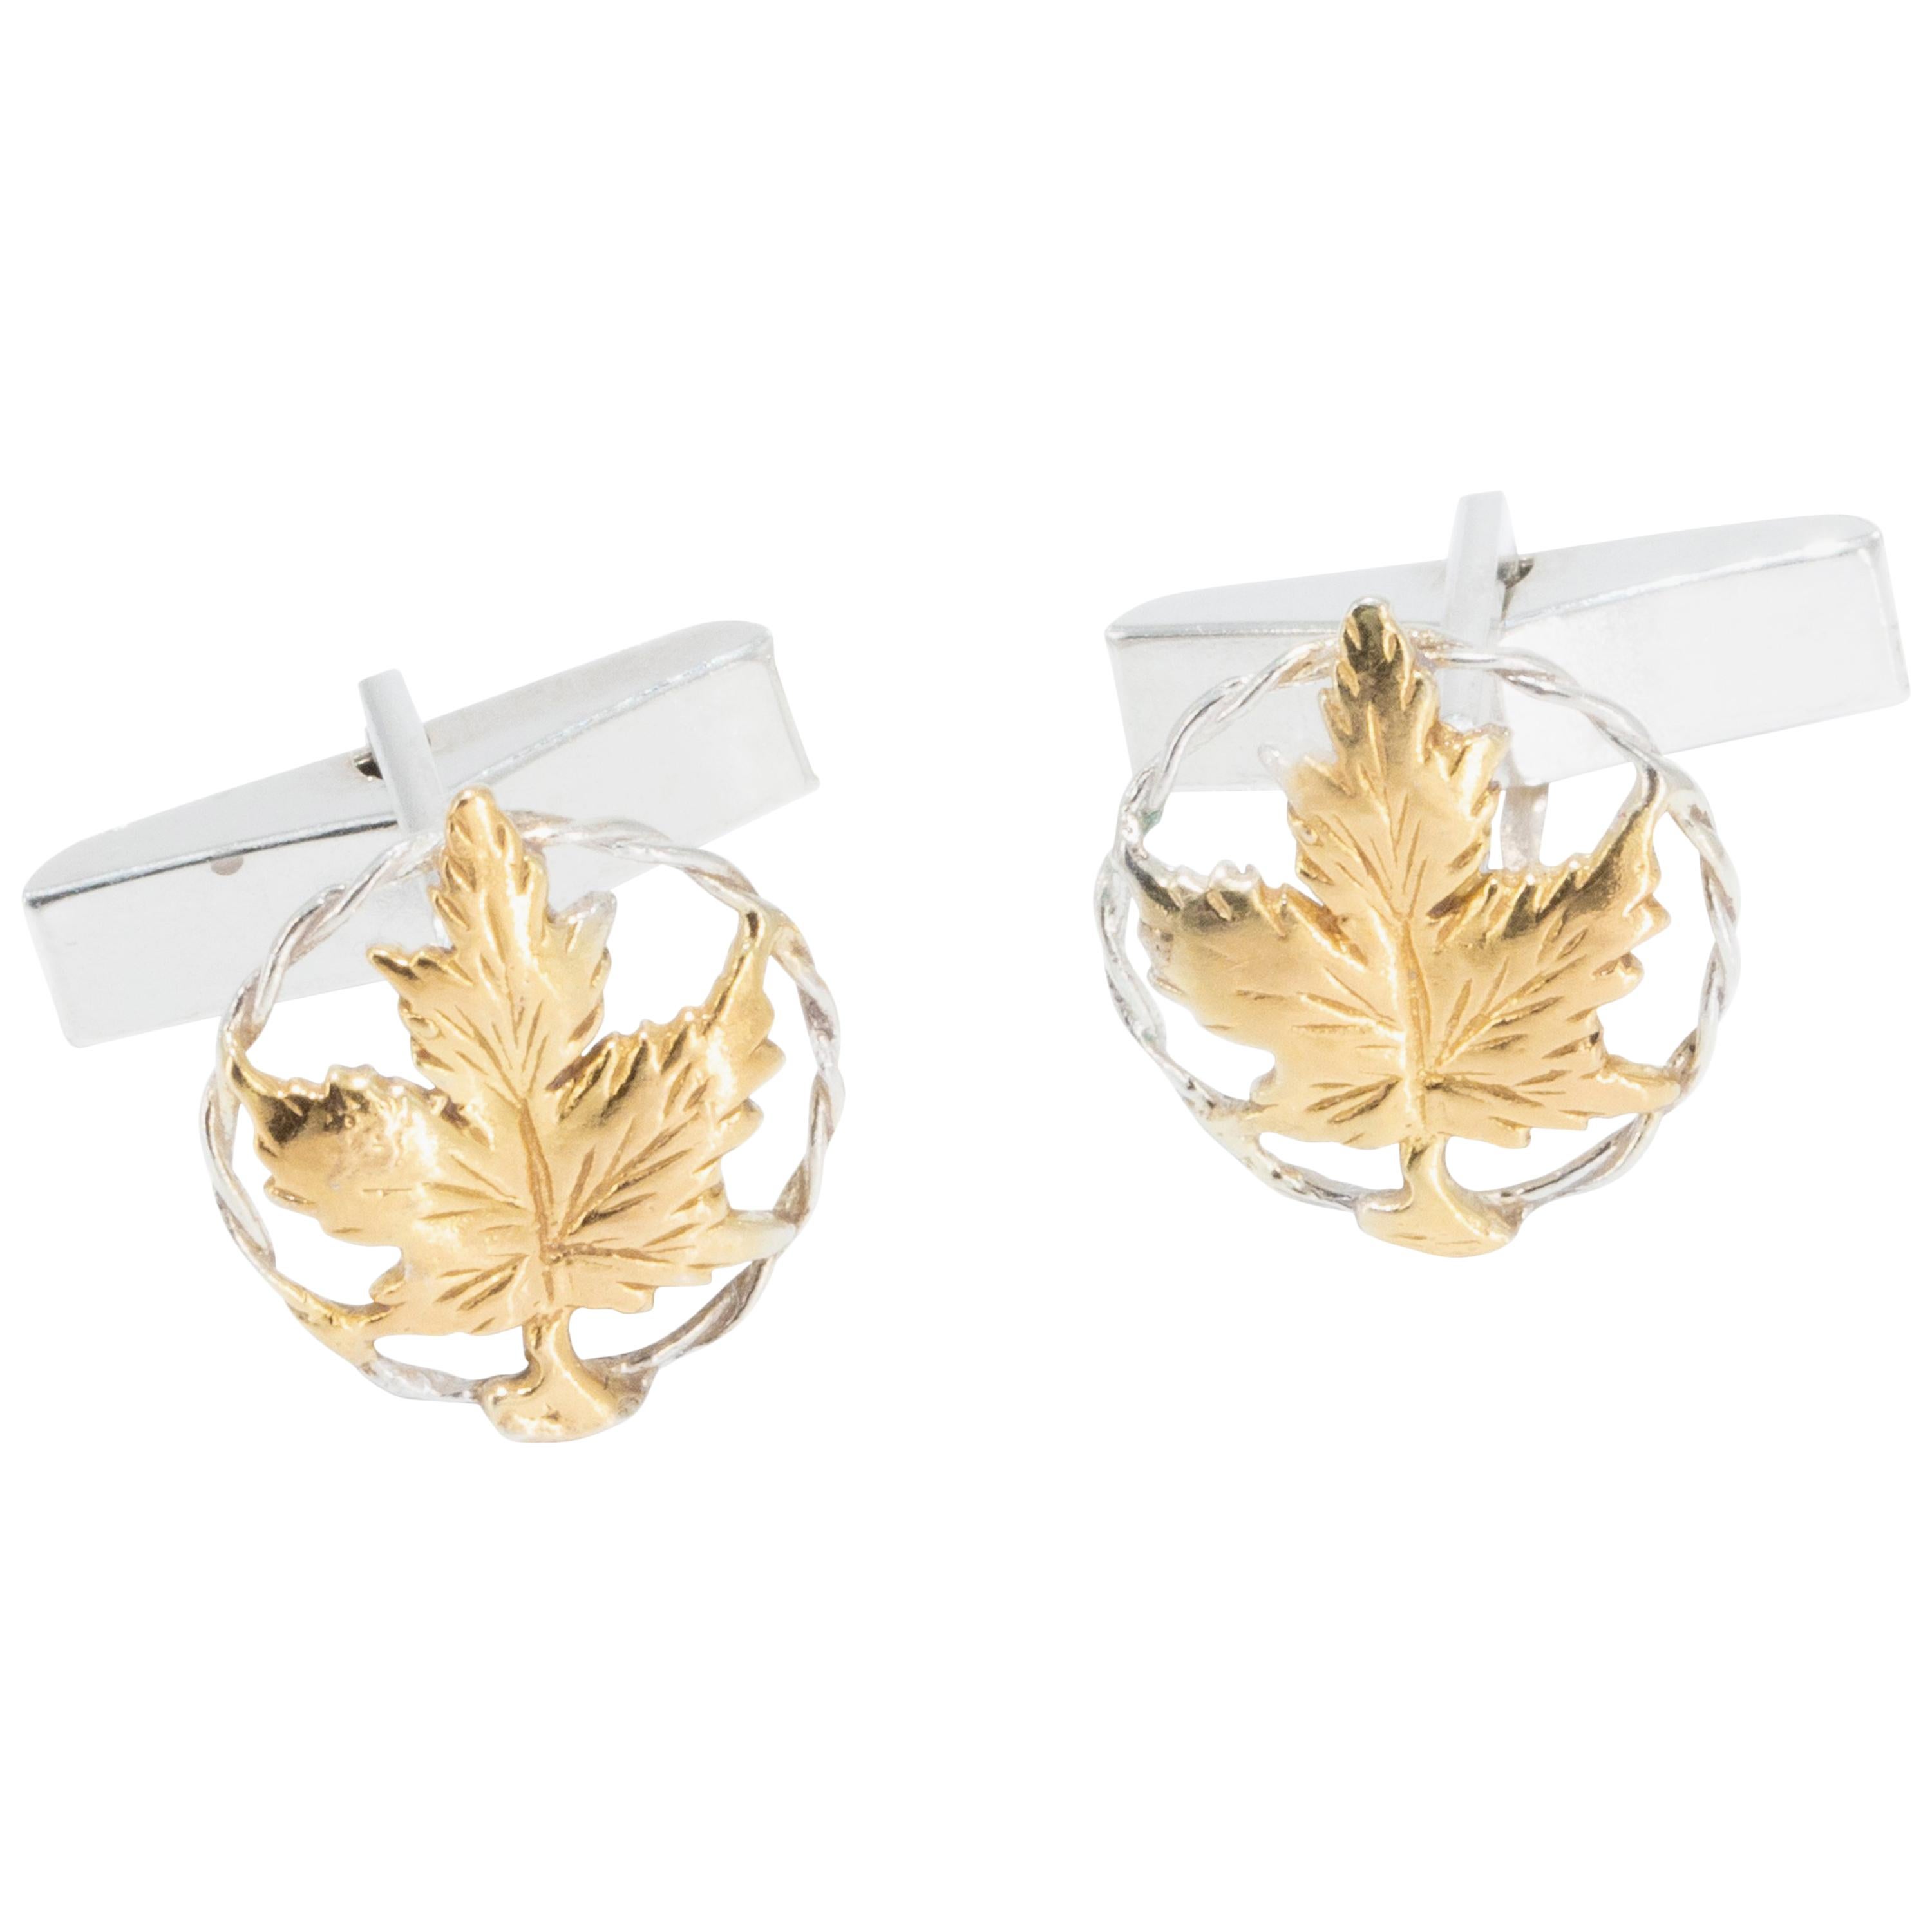 Maple Leaf Cufflinks in 18 Karat Gold on Sterling Silver For Sale